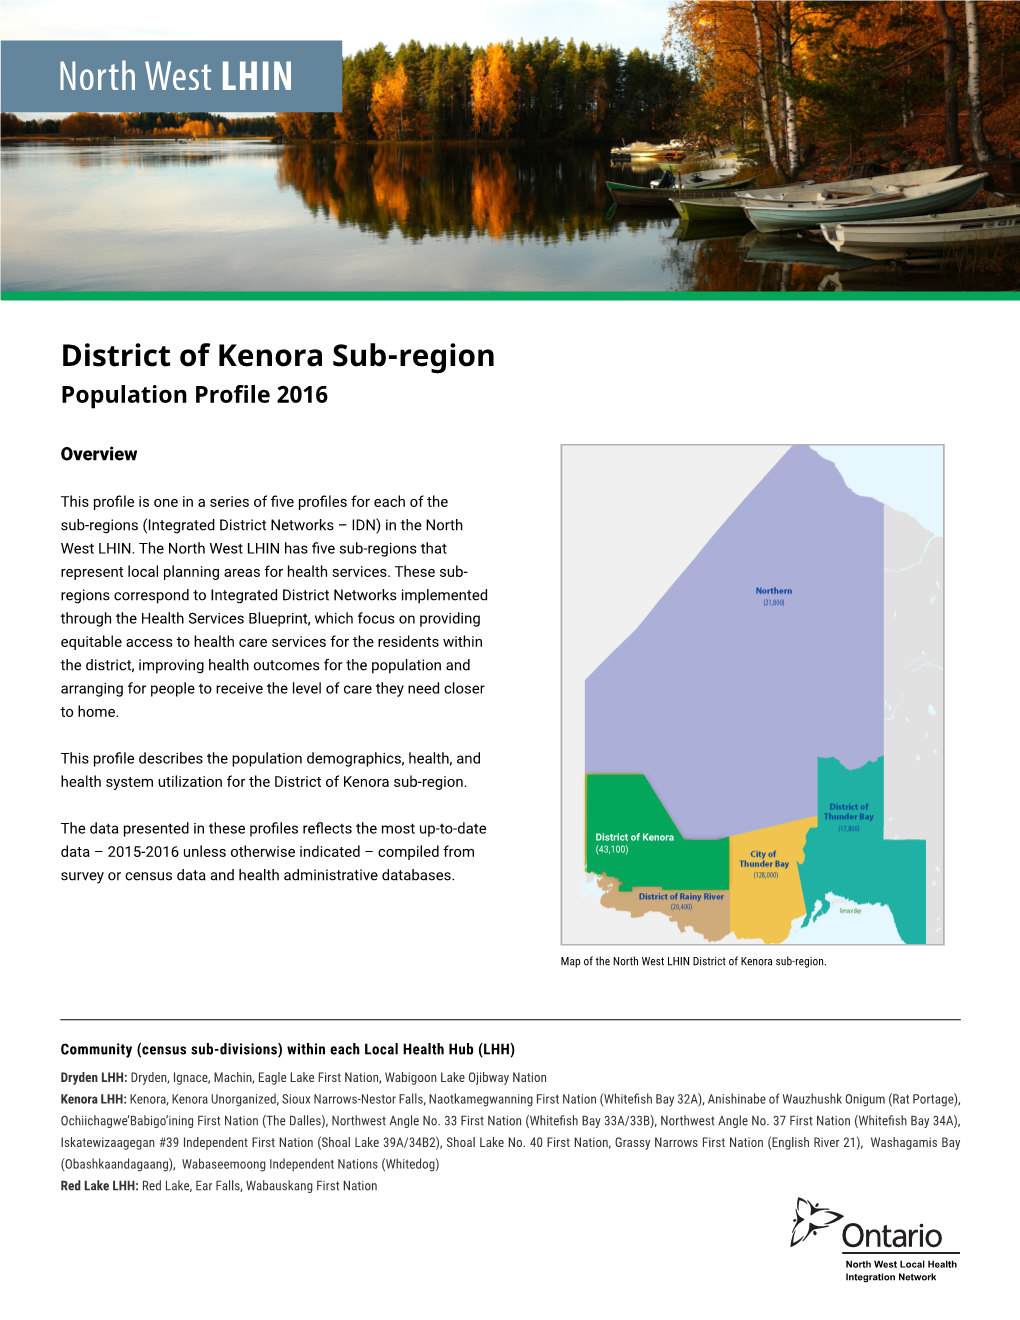 District of Kenora Sub-Region Population Profile 2016